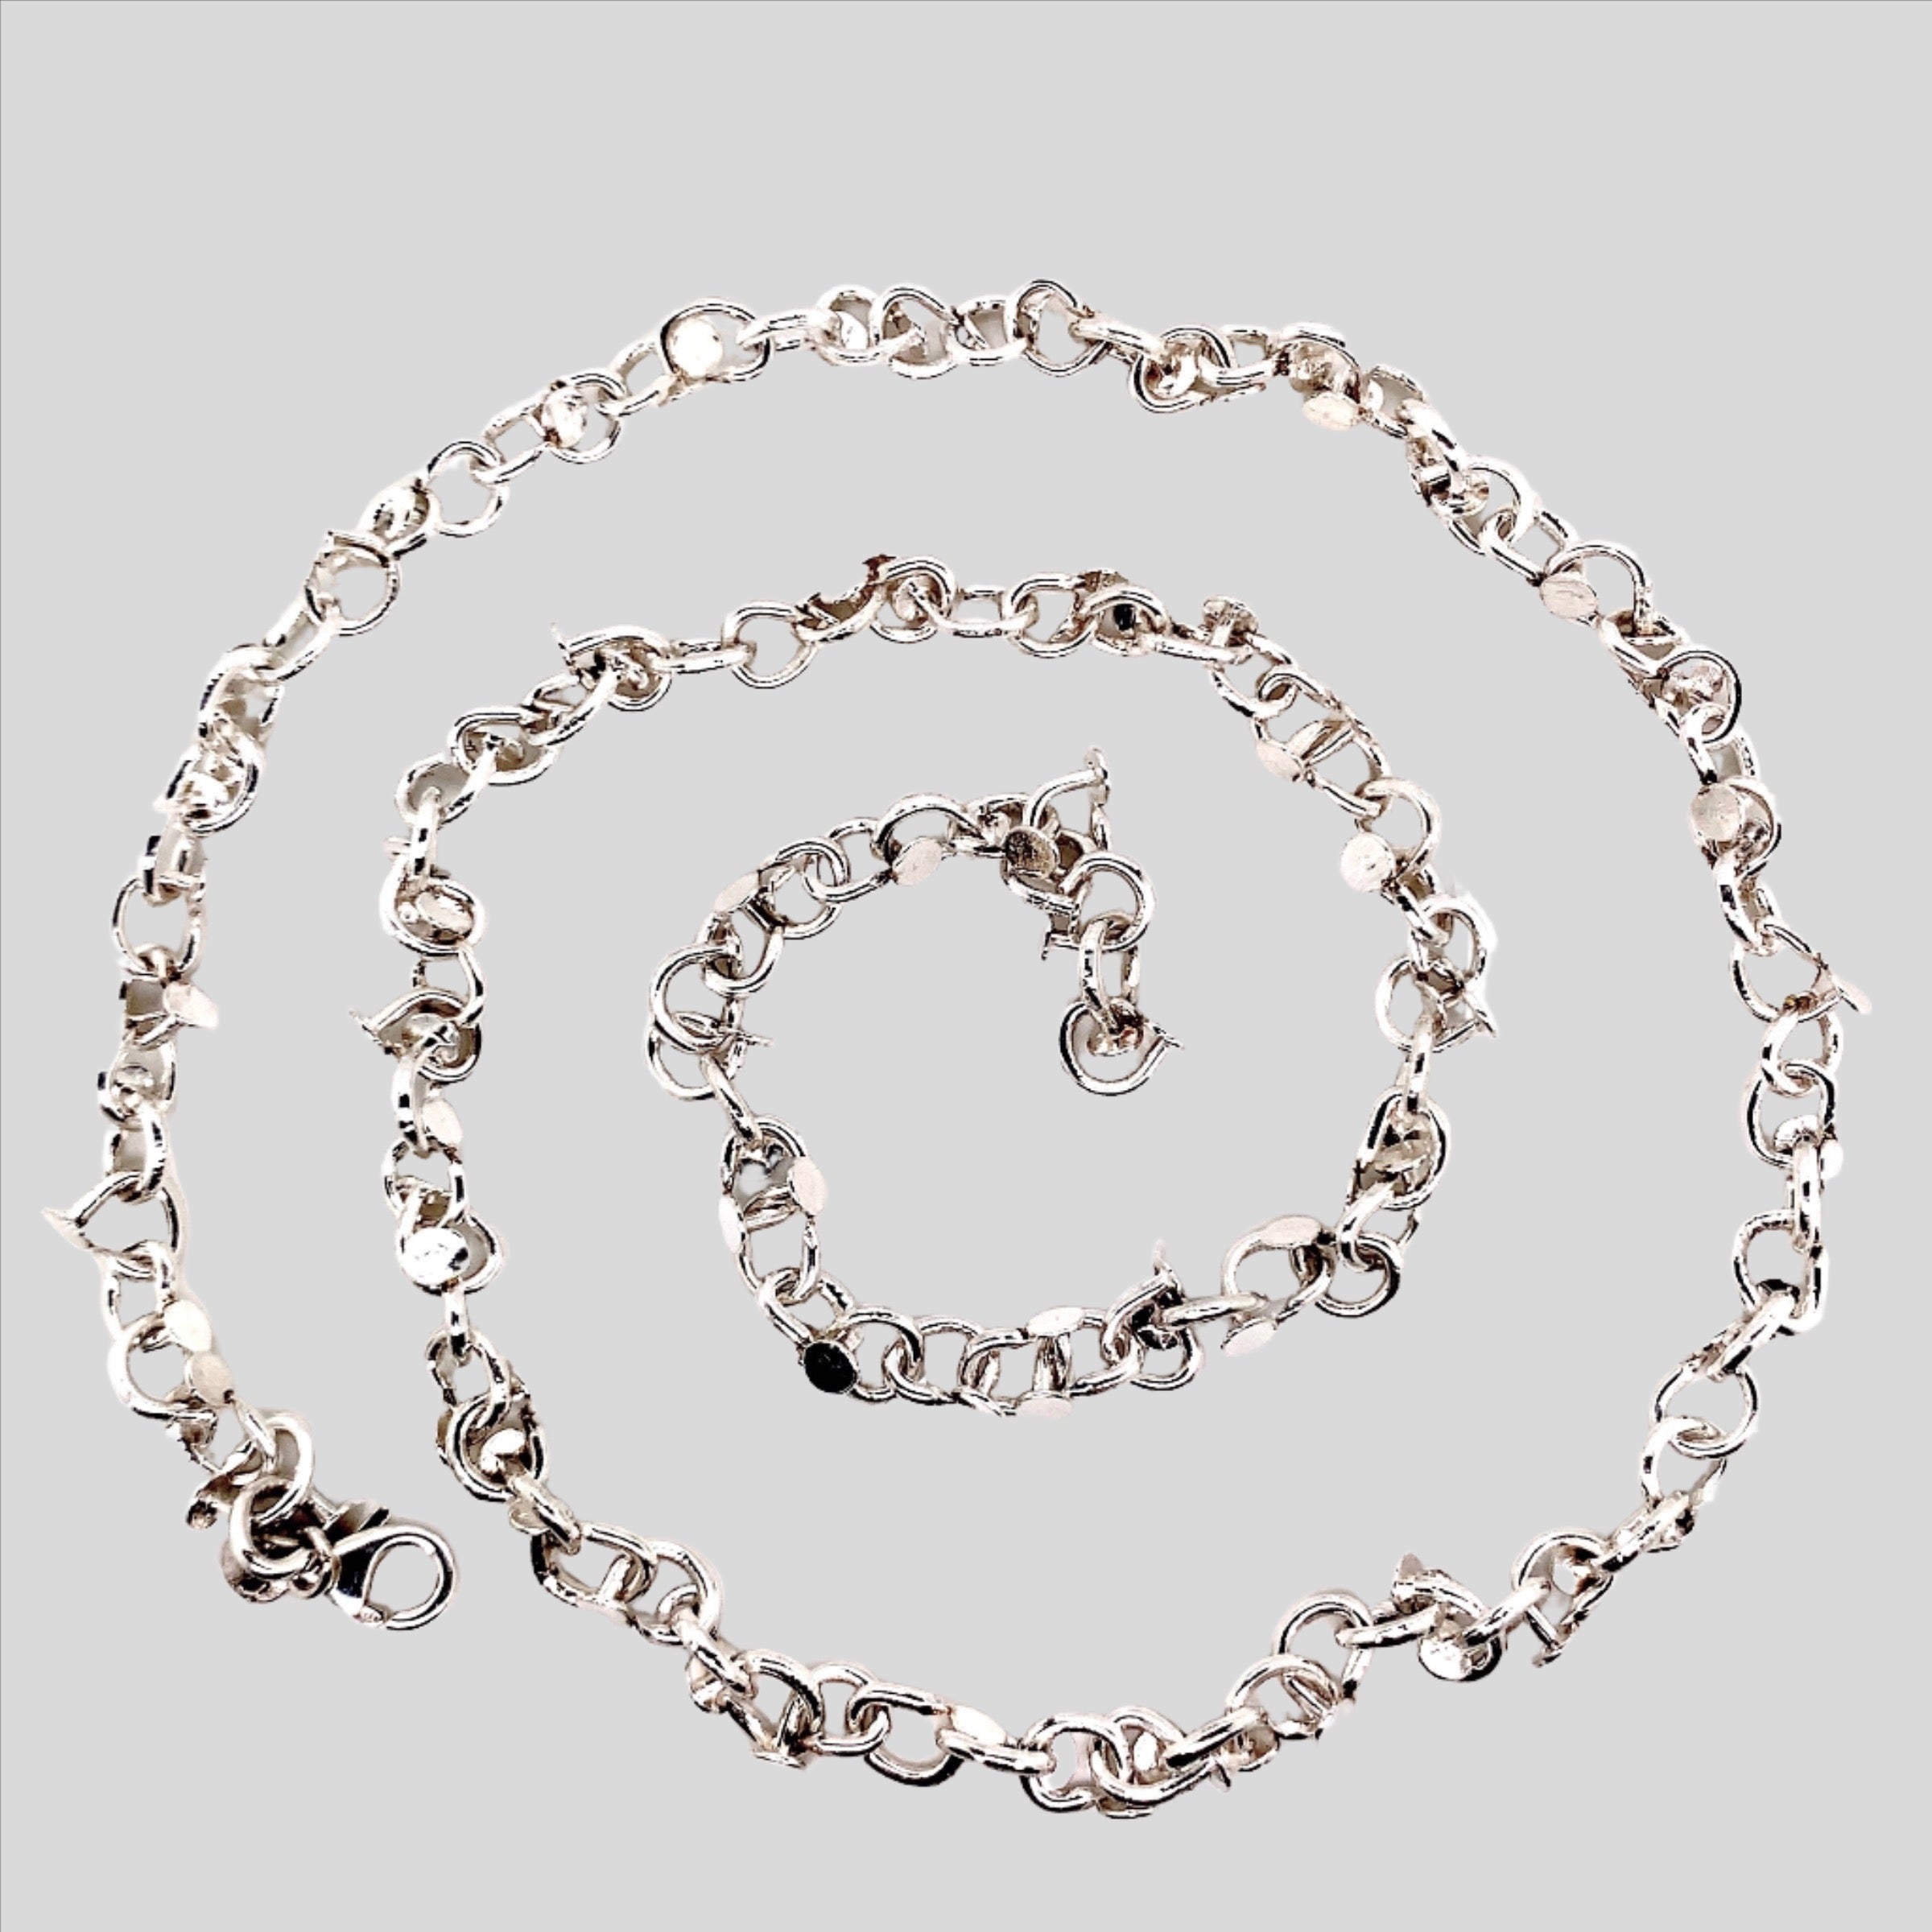 Titanium Chains & Necklaces: Buyer's Guide - Avant-Garde Titanium Jewelry  Blog - TitaniumStyle.com